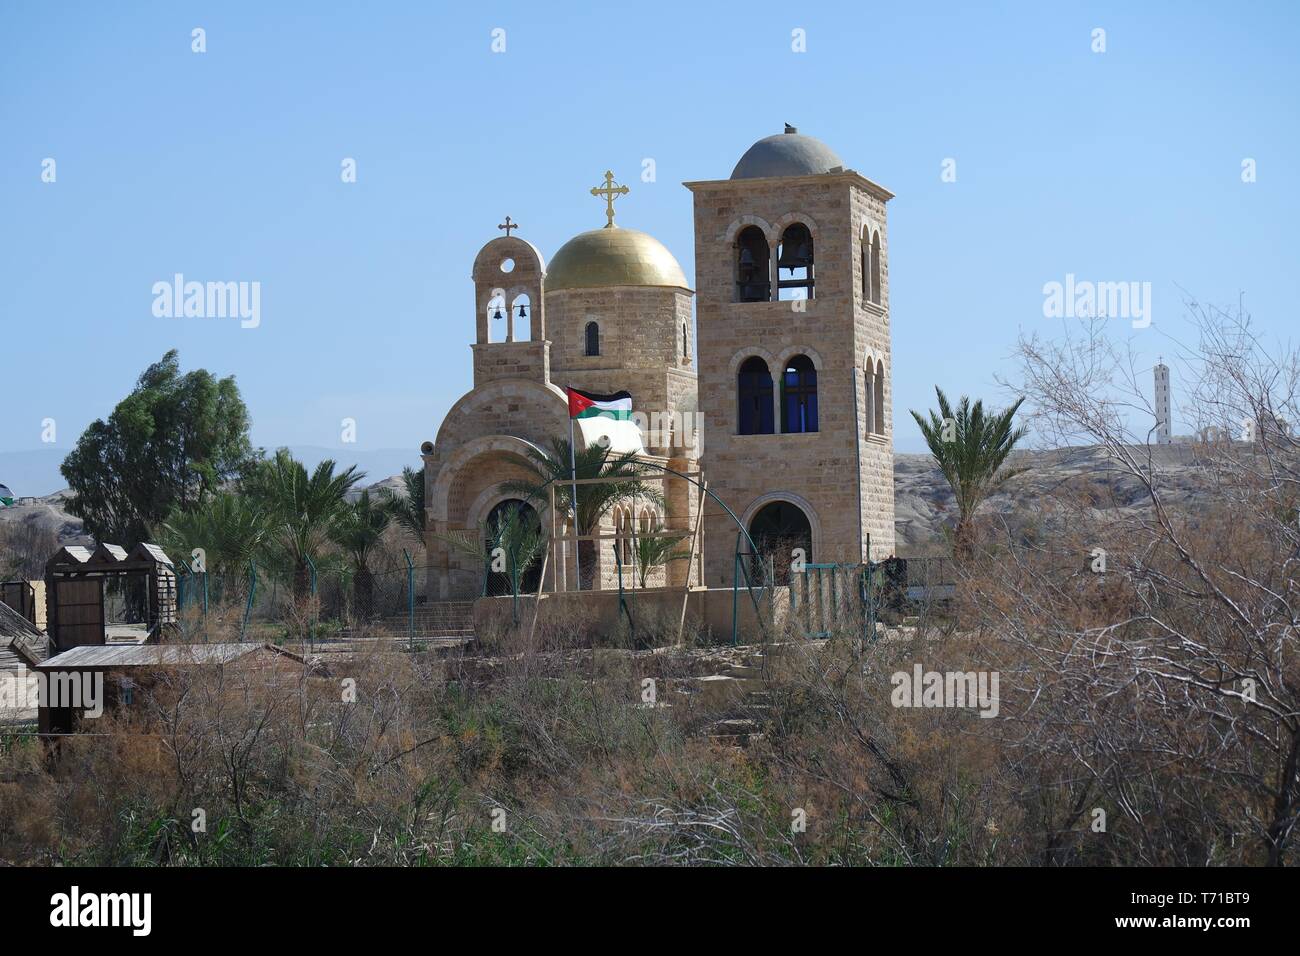 Orthodox church at the Jordan baptismal site, Jordan Stock Photo